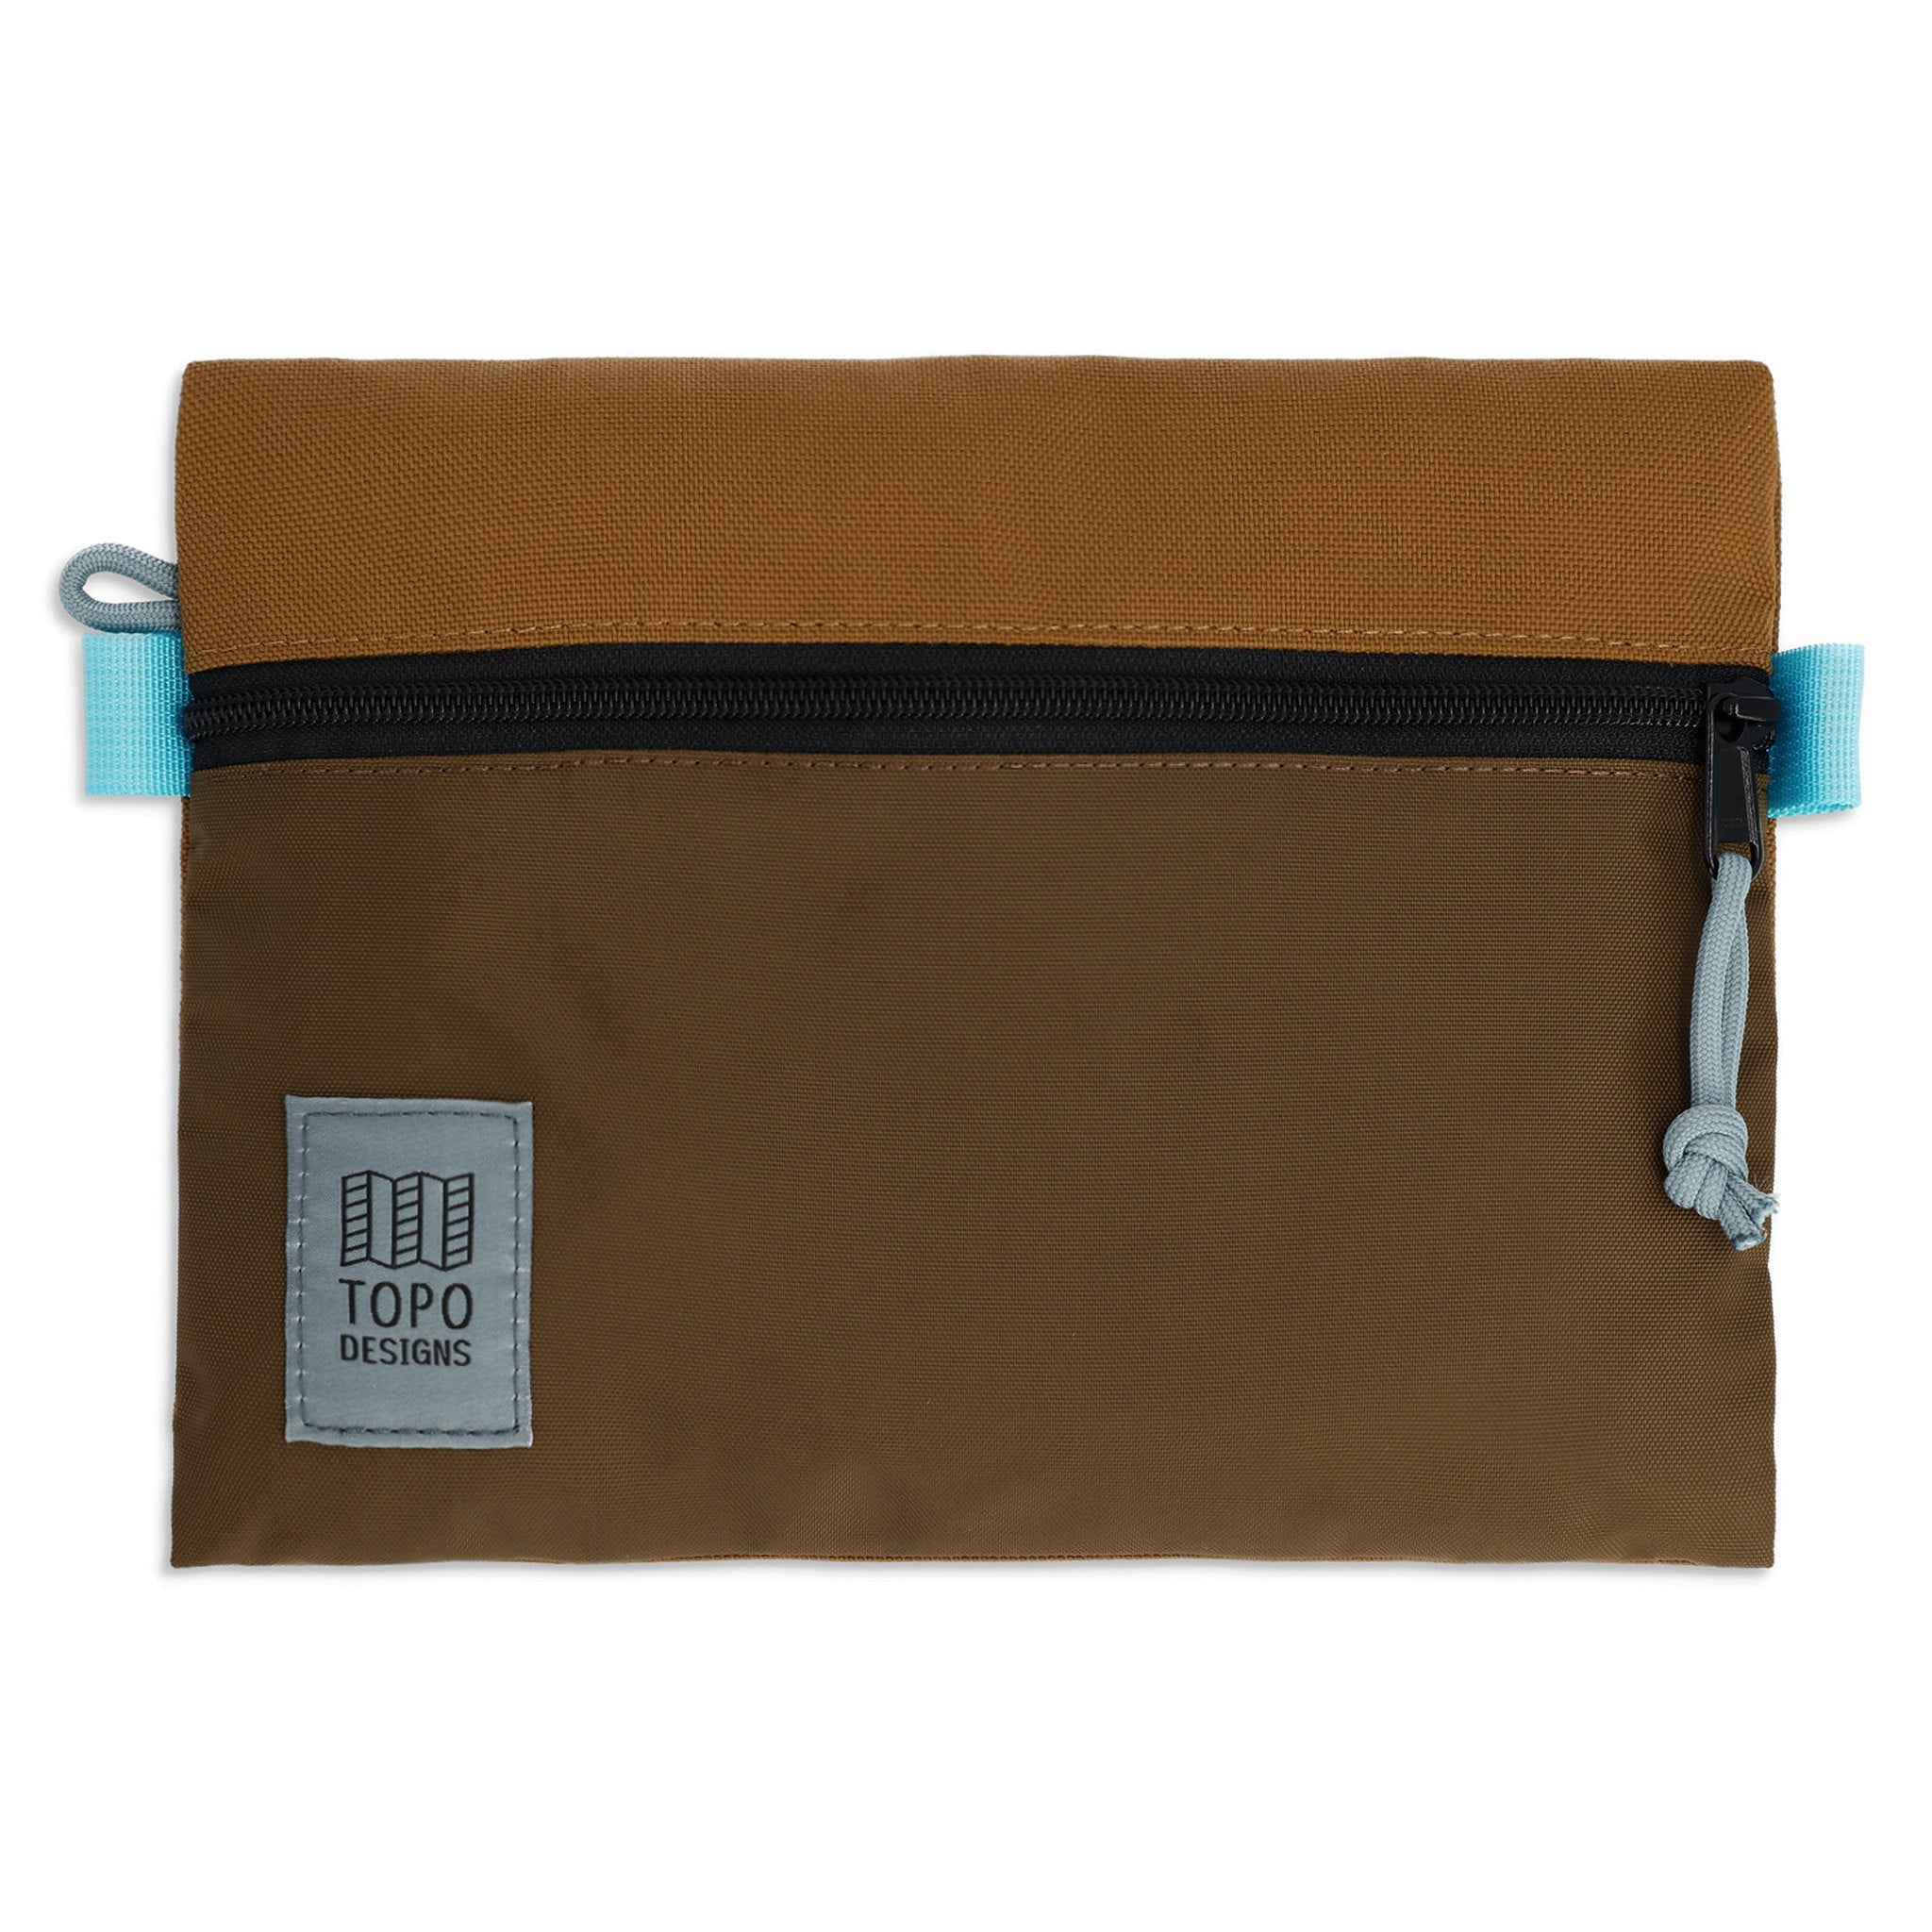 Accessory Bag Medium | Topo Designs - Sale